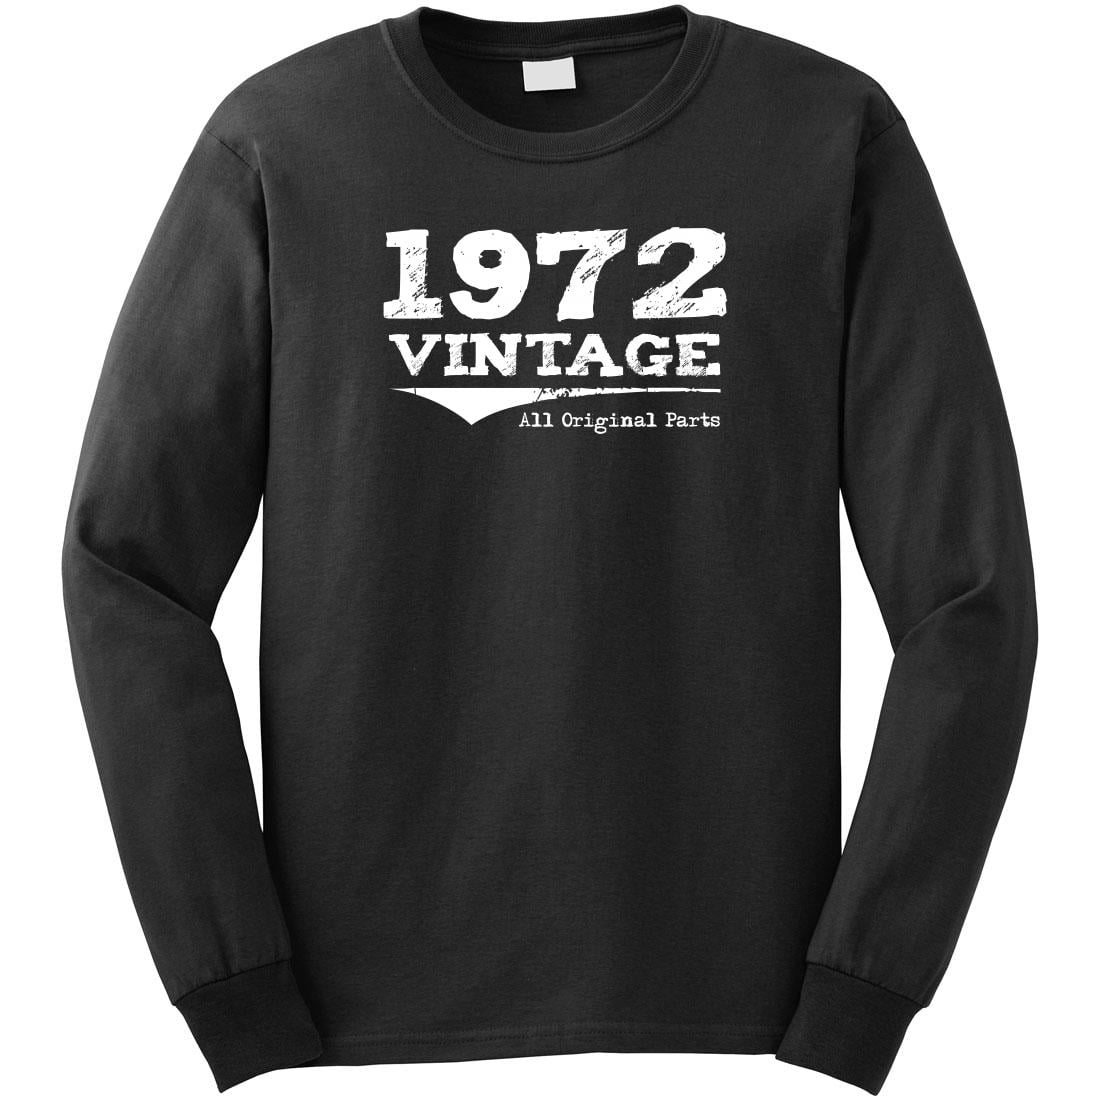 Vintage 1972 All Original Parts Long Sleeve Shirt - ID: 943 - Walmart.com